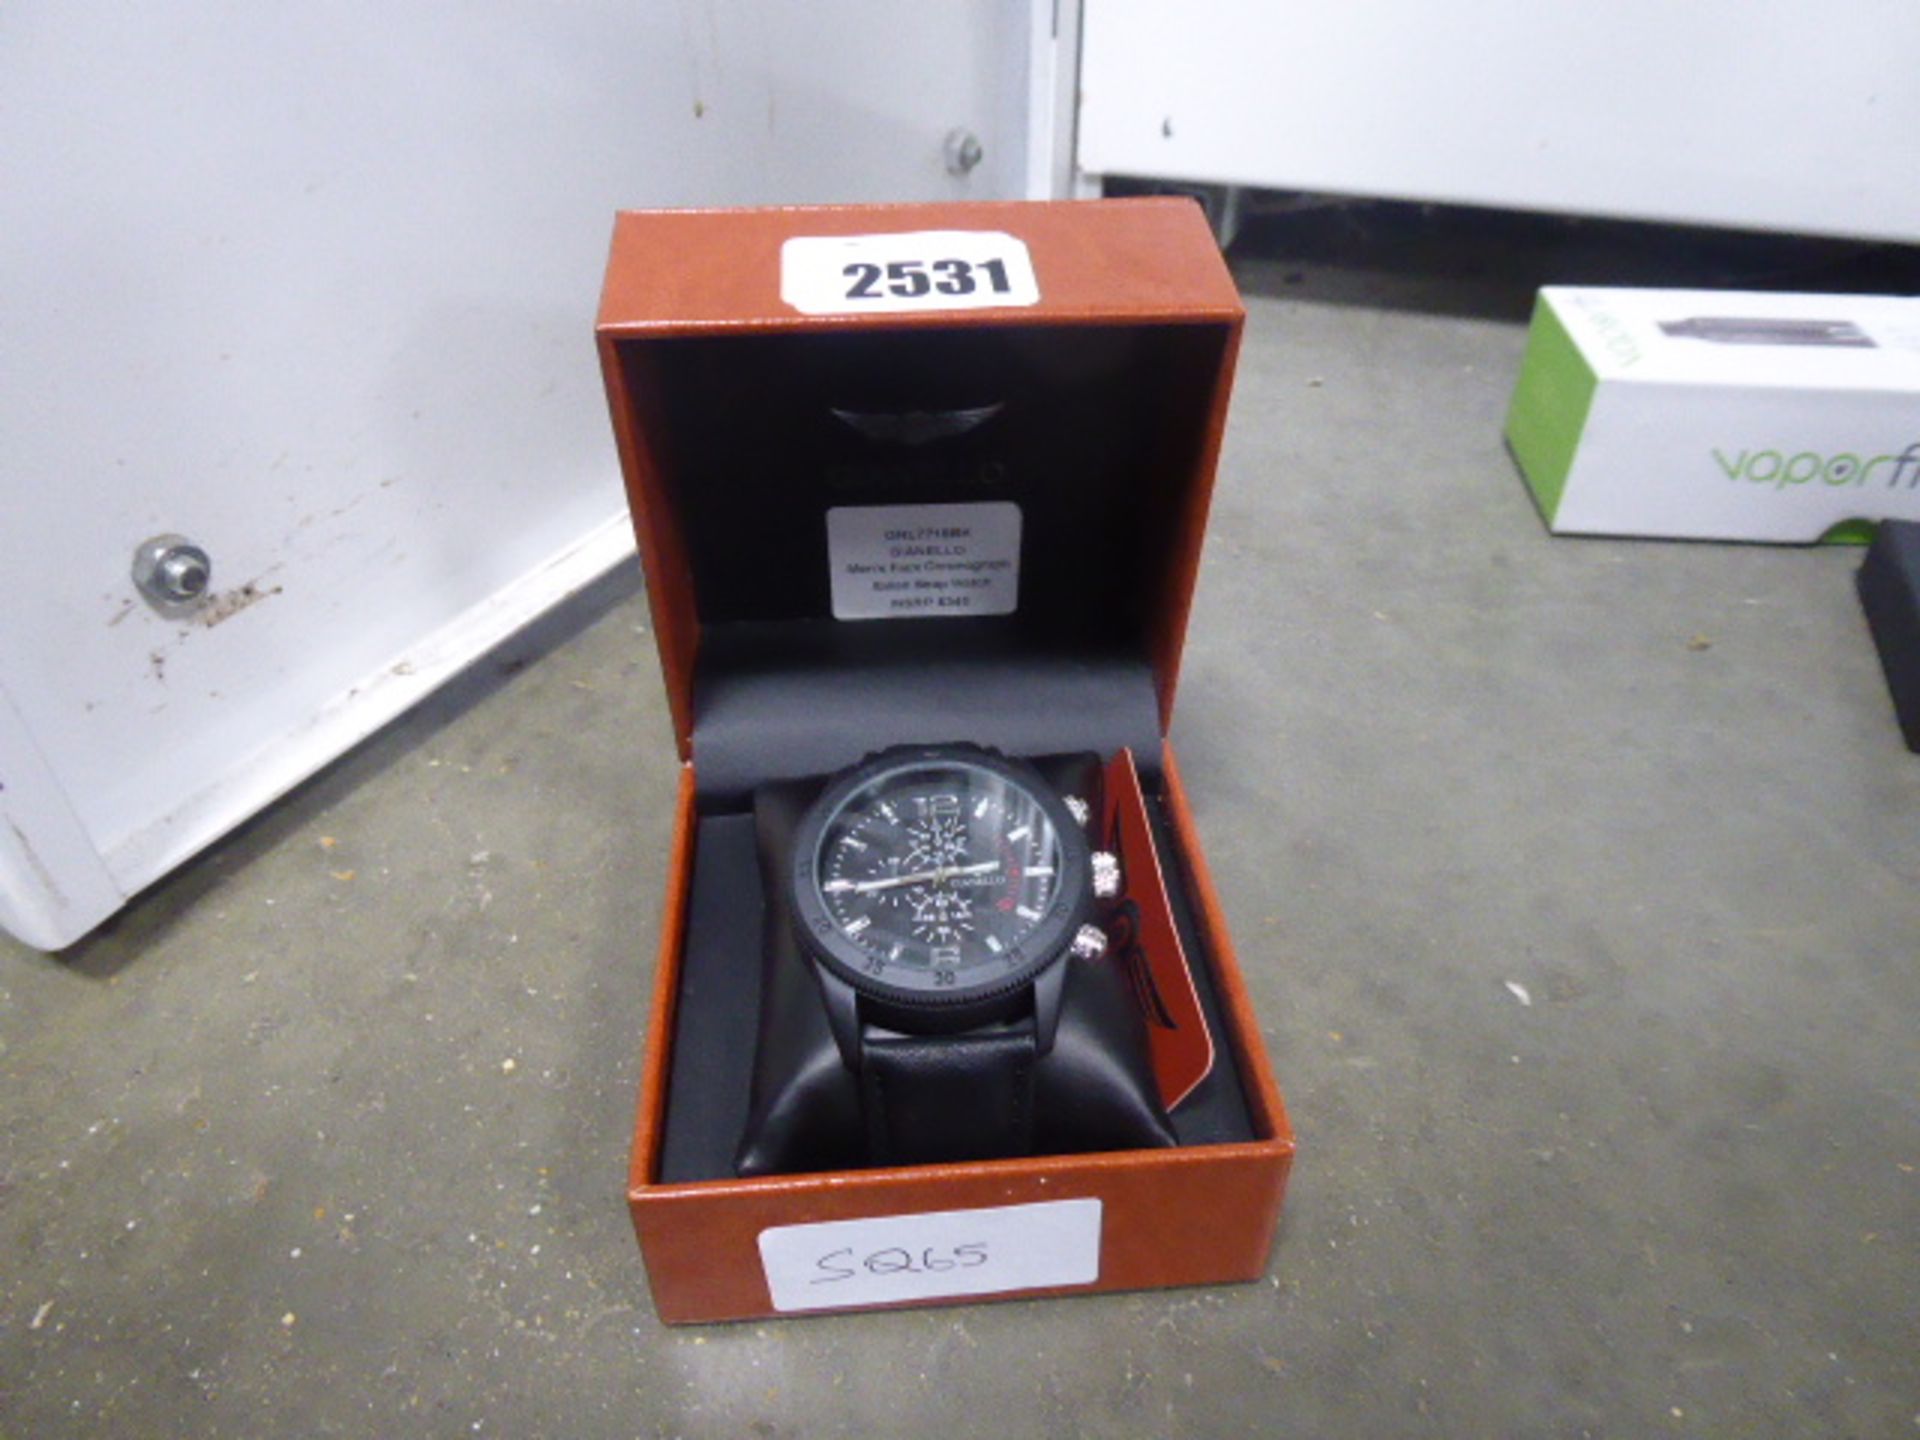 2387 - Gianello black leather strap wristwatch with box